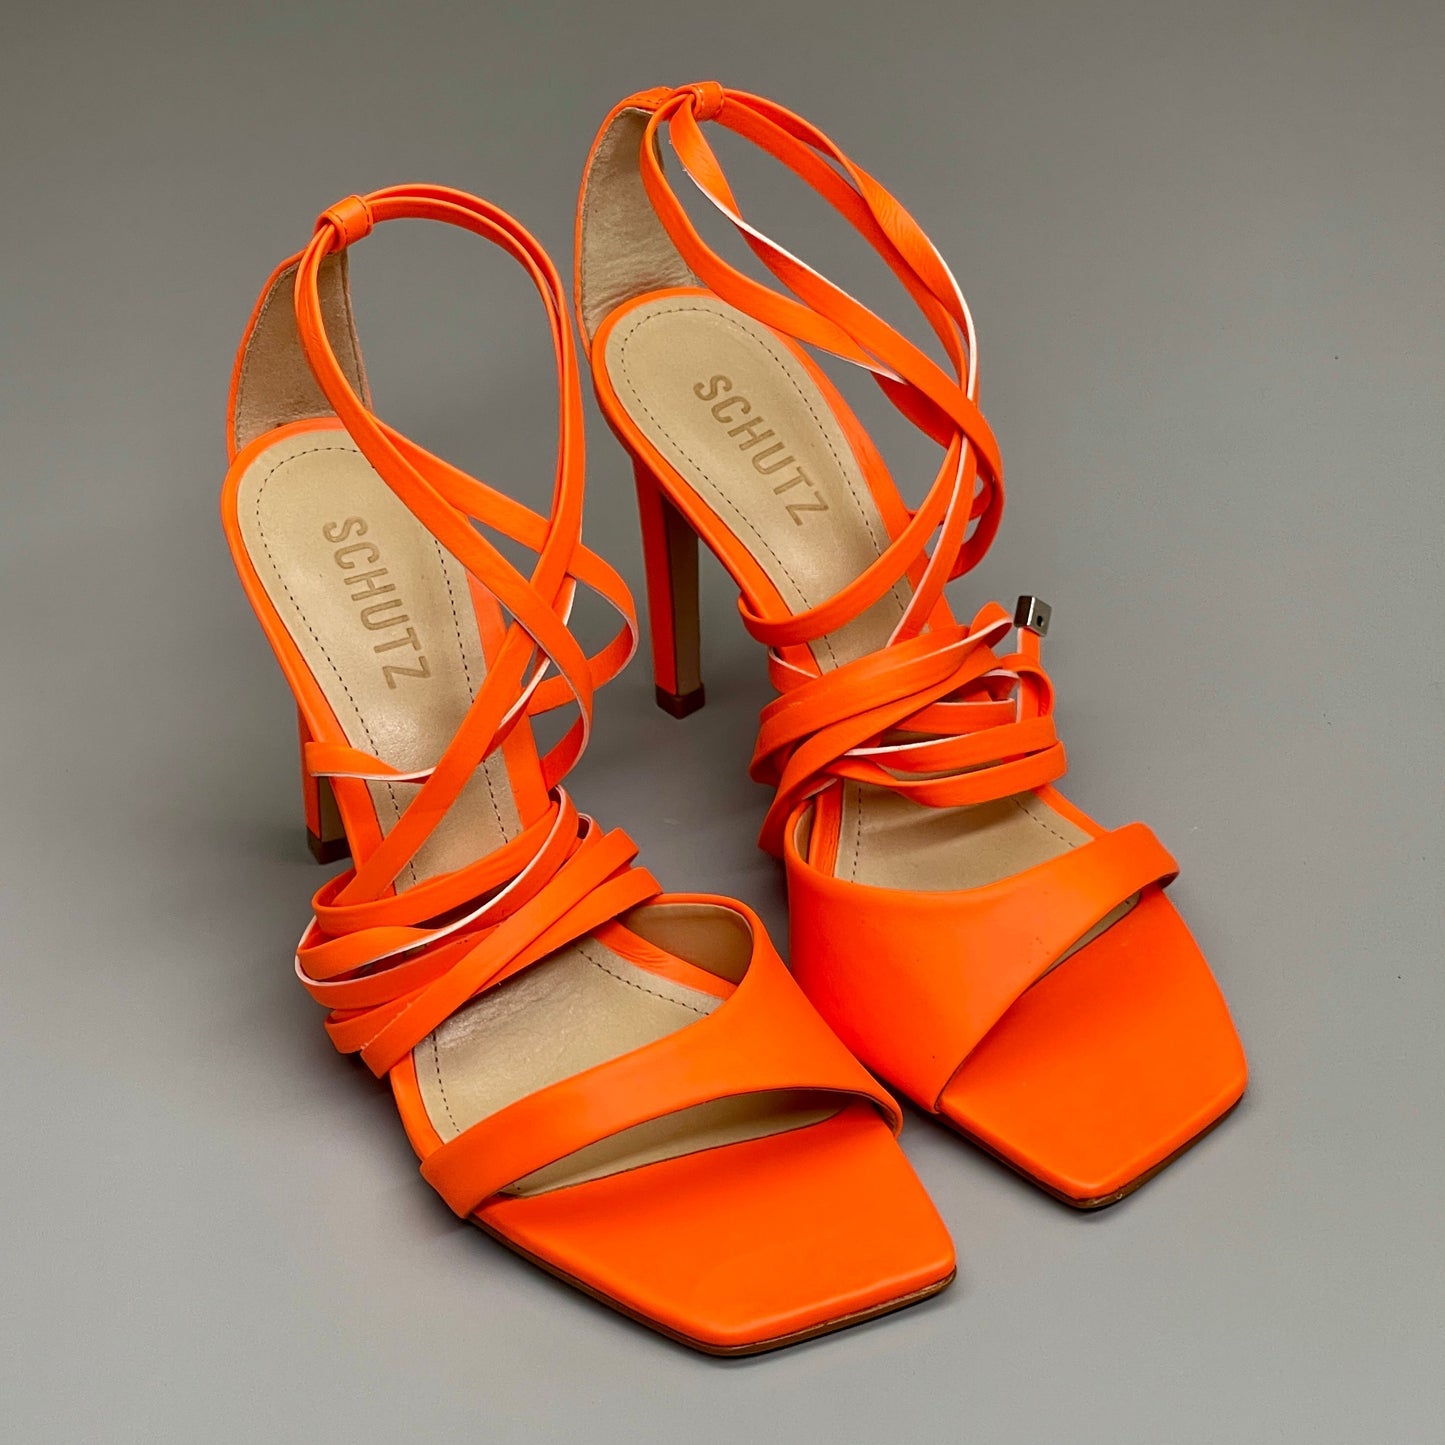 SCHUTZ Bryce Ankle Tie Women's High Heel Leather Strappy Sandal Acid Orange Sz 8.5 (New)